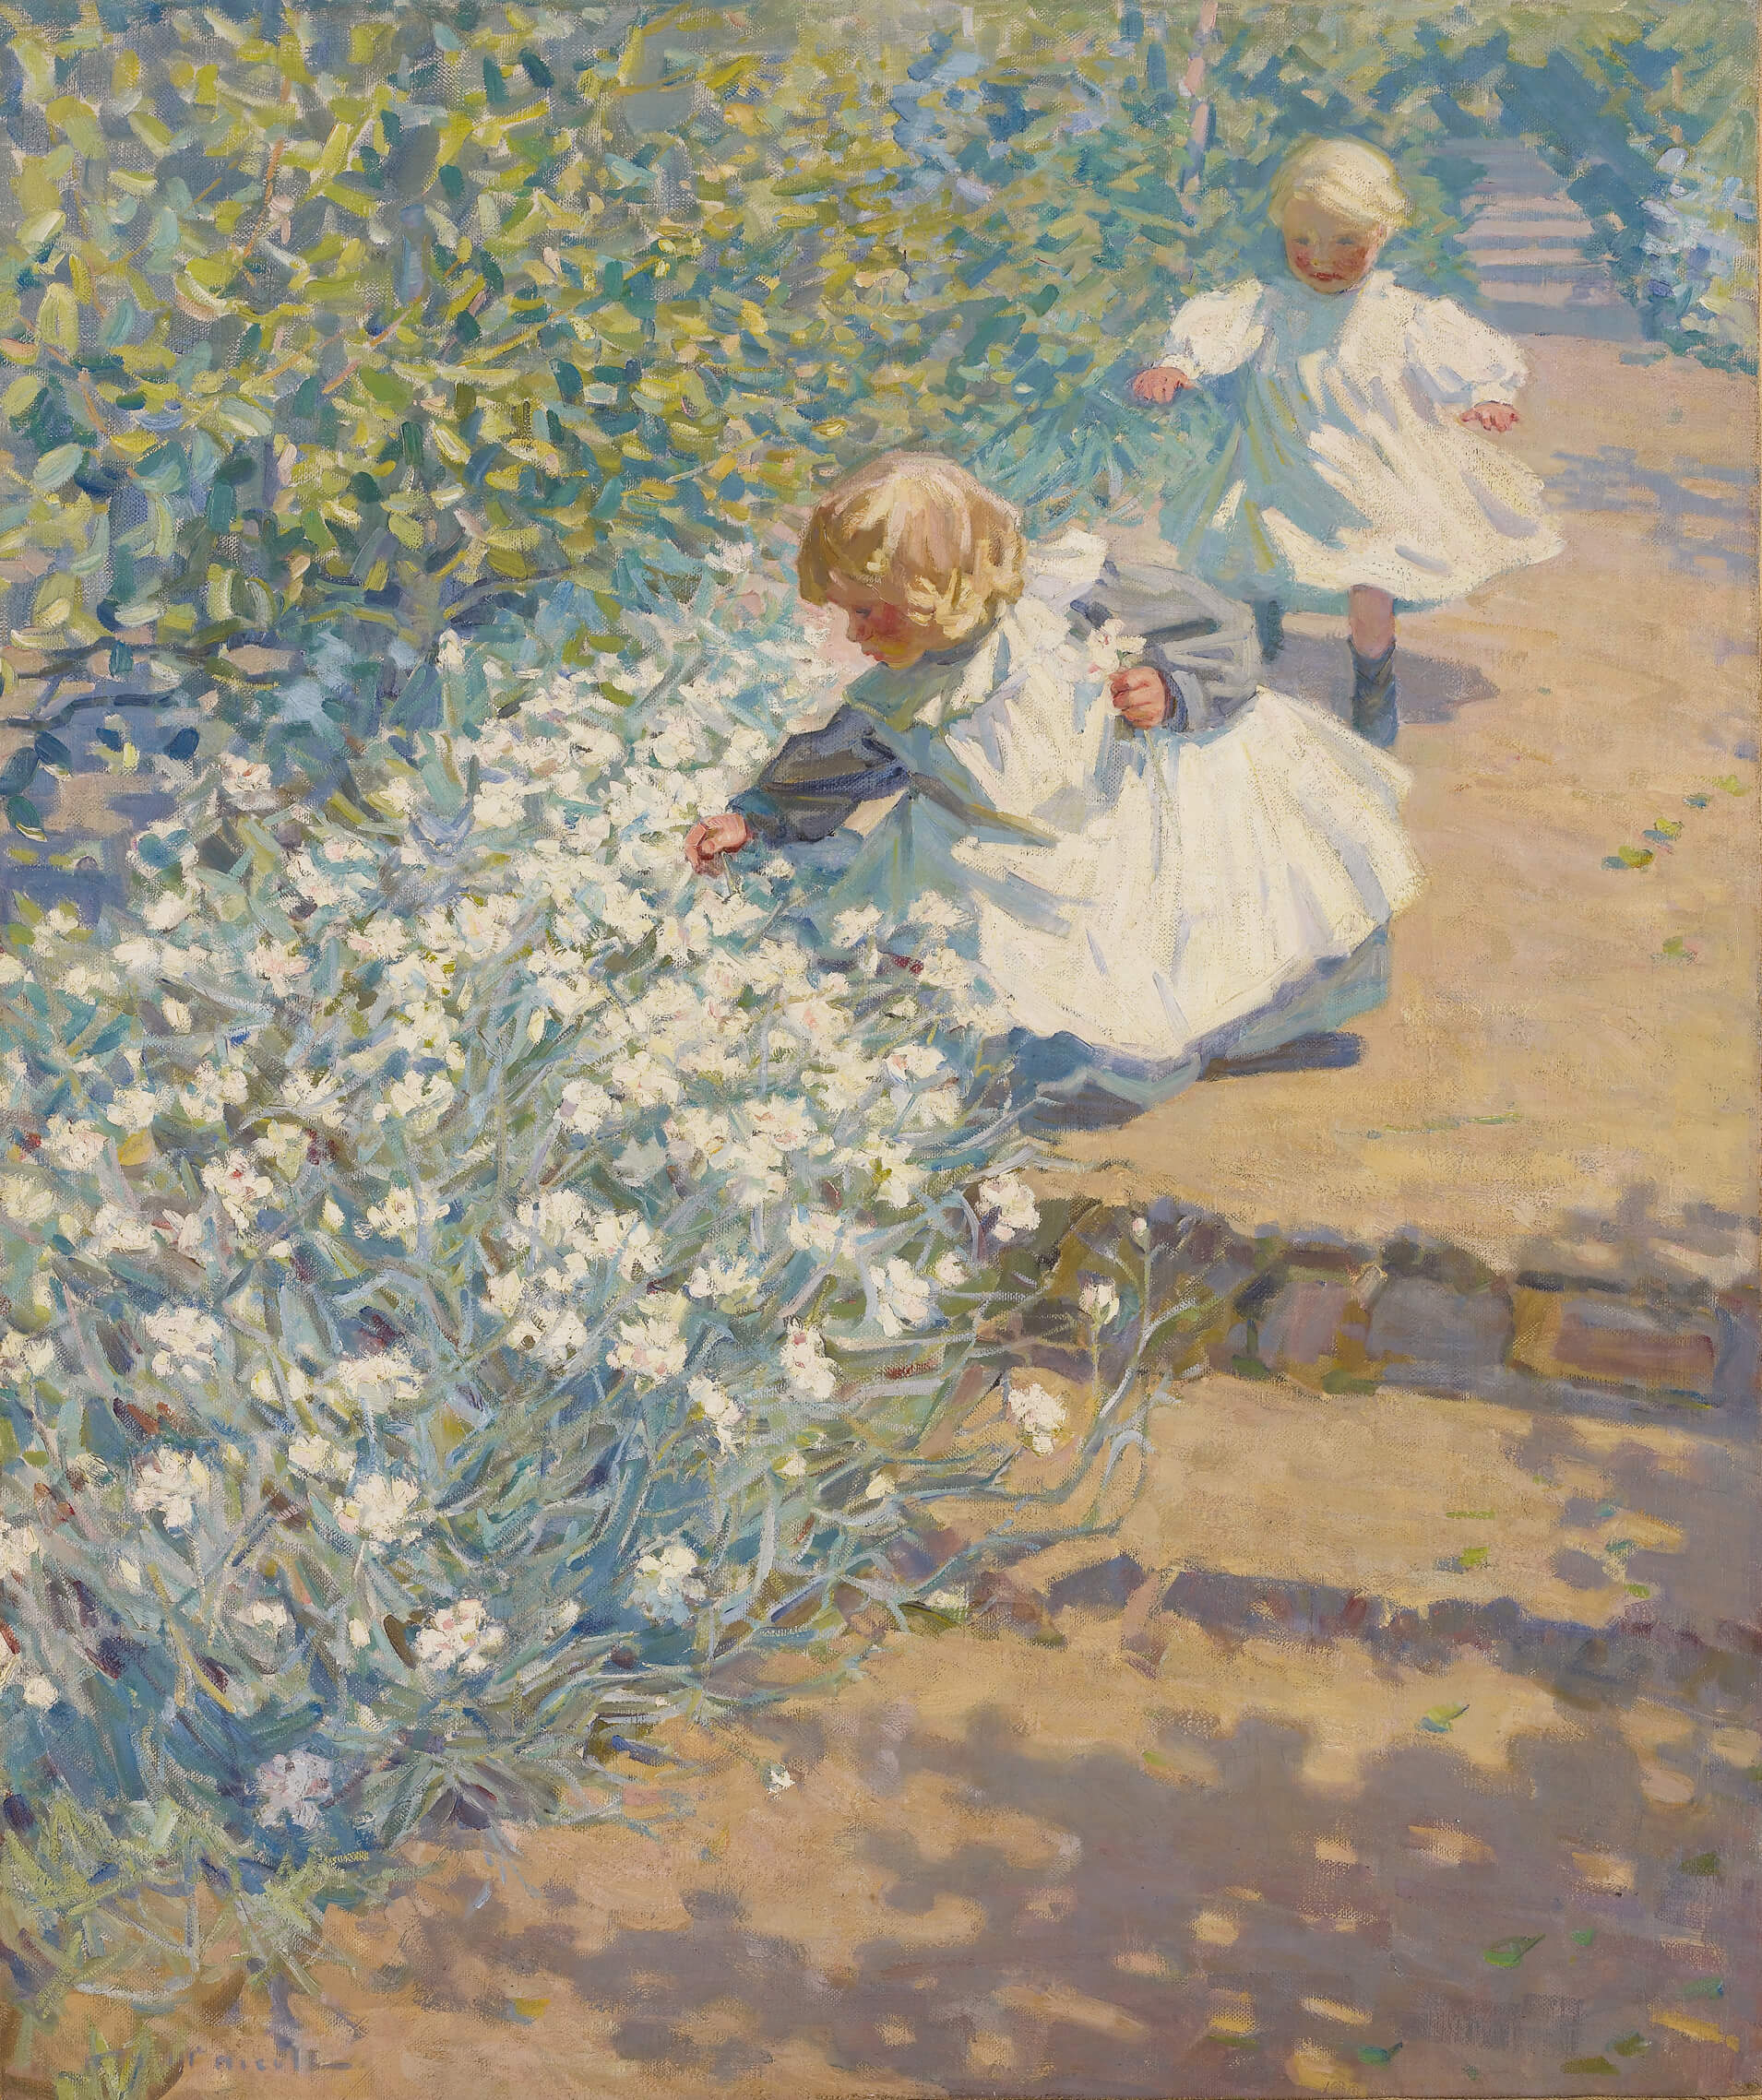 Helen McNicoll, La cueillette de fleurs, v. 1912